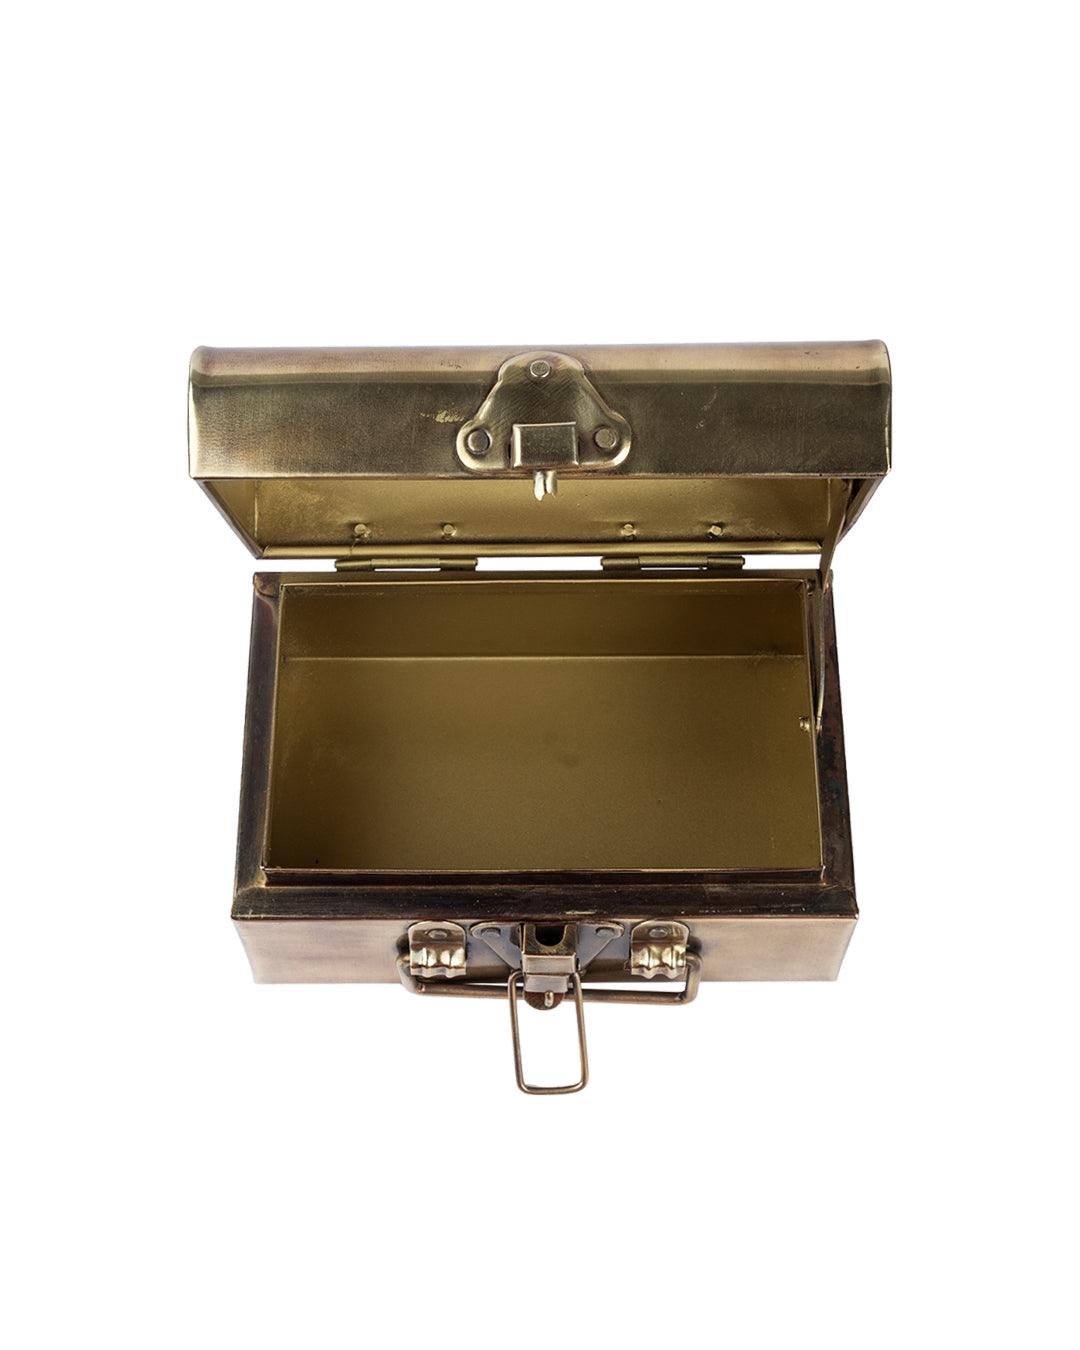 Market99 Trunk Jewellery Storage Box, Golden Colour, Mild Steel - MARKET 99